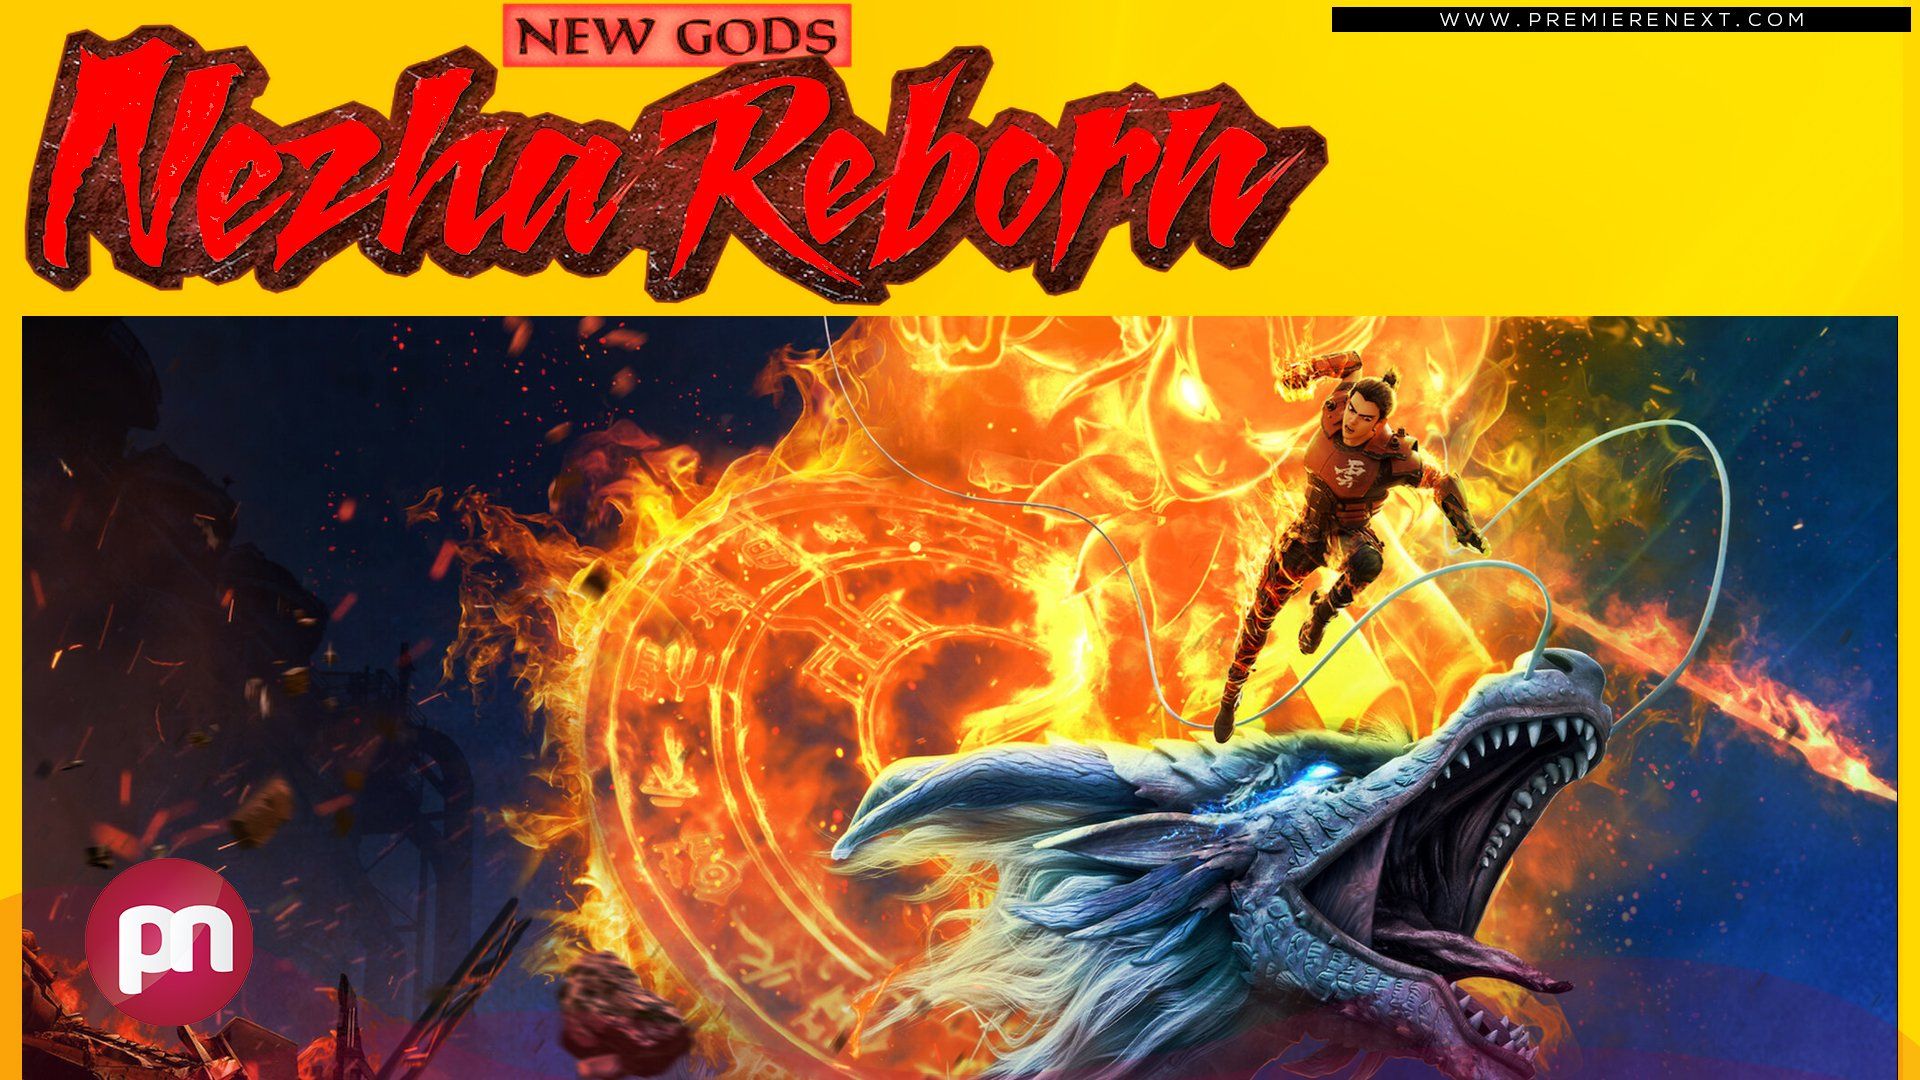 New Gods Nezha Reborn: Netflix New Anime Coming Soon In Eng Dub?